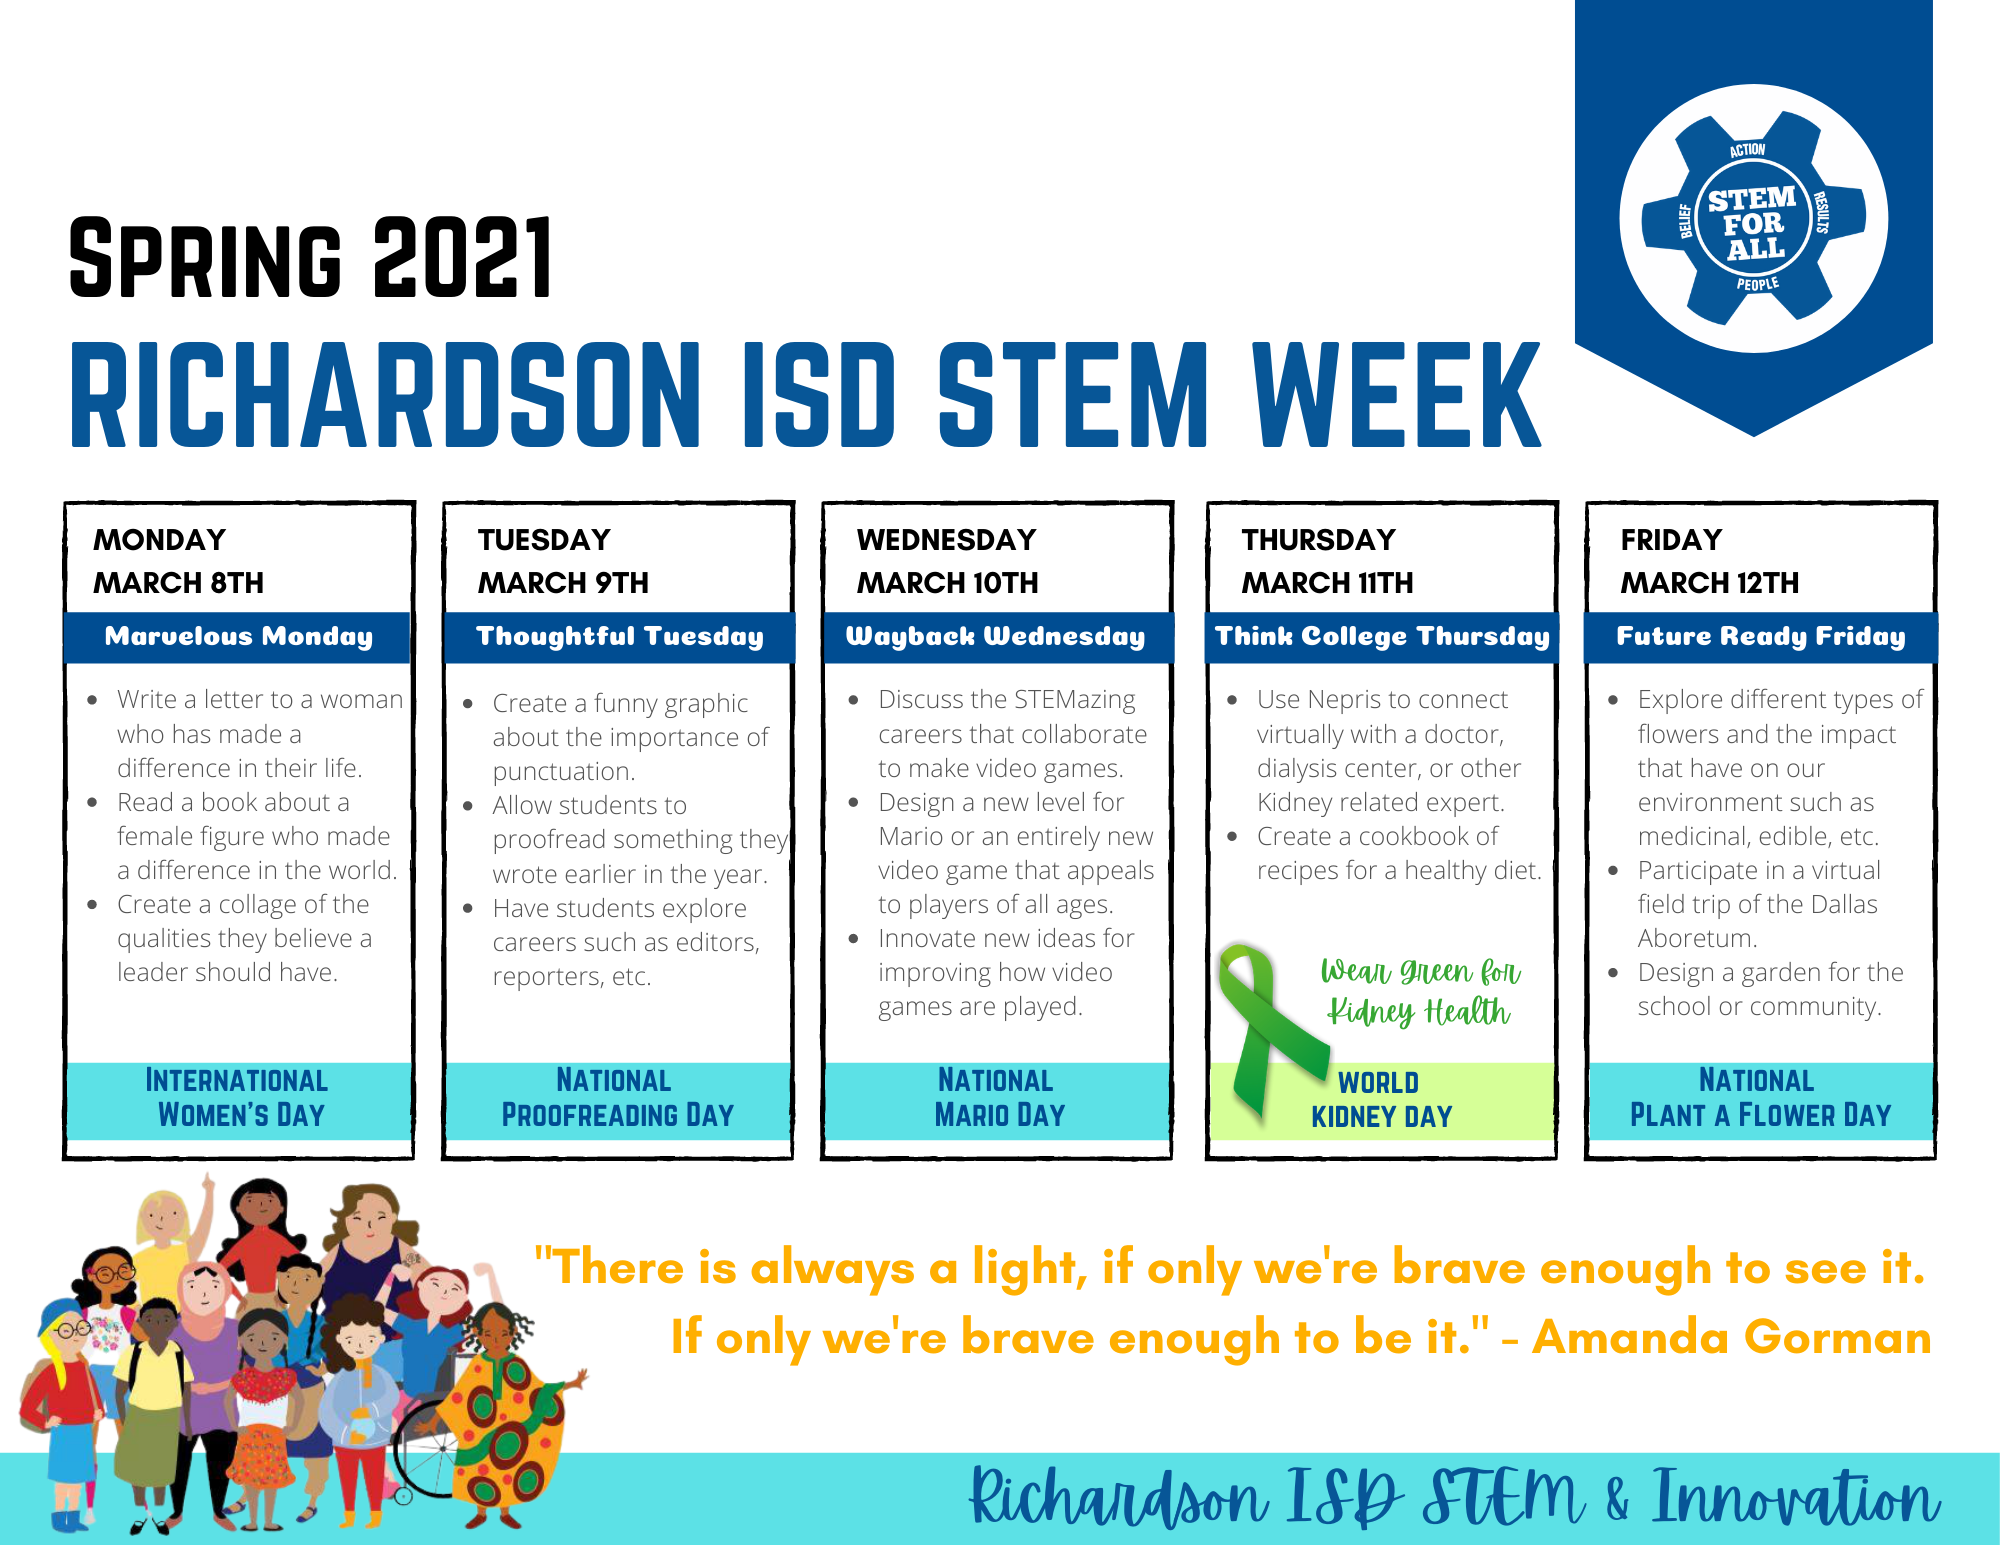 RISD STEM Week - Richardson Independent School District